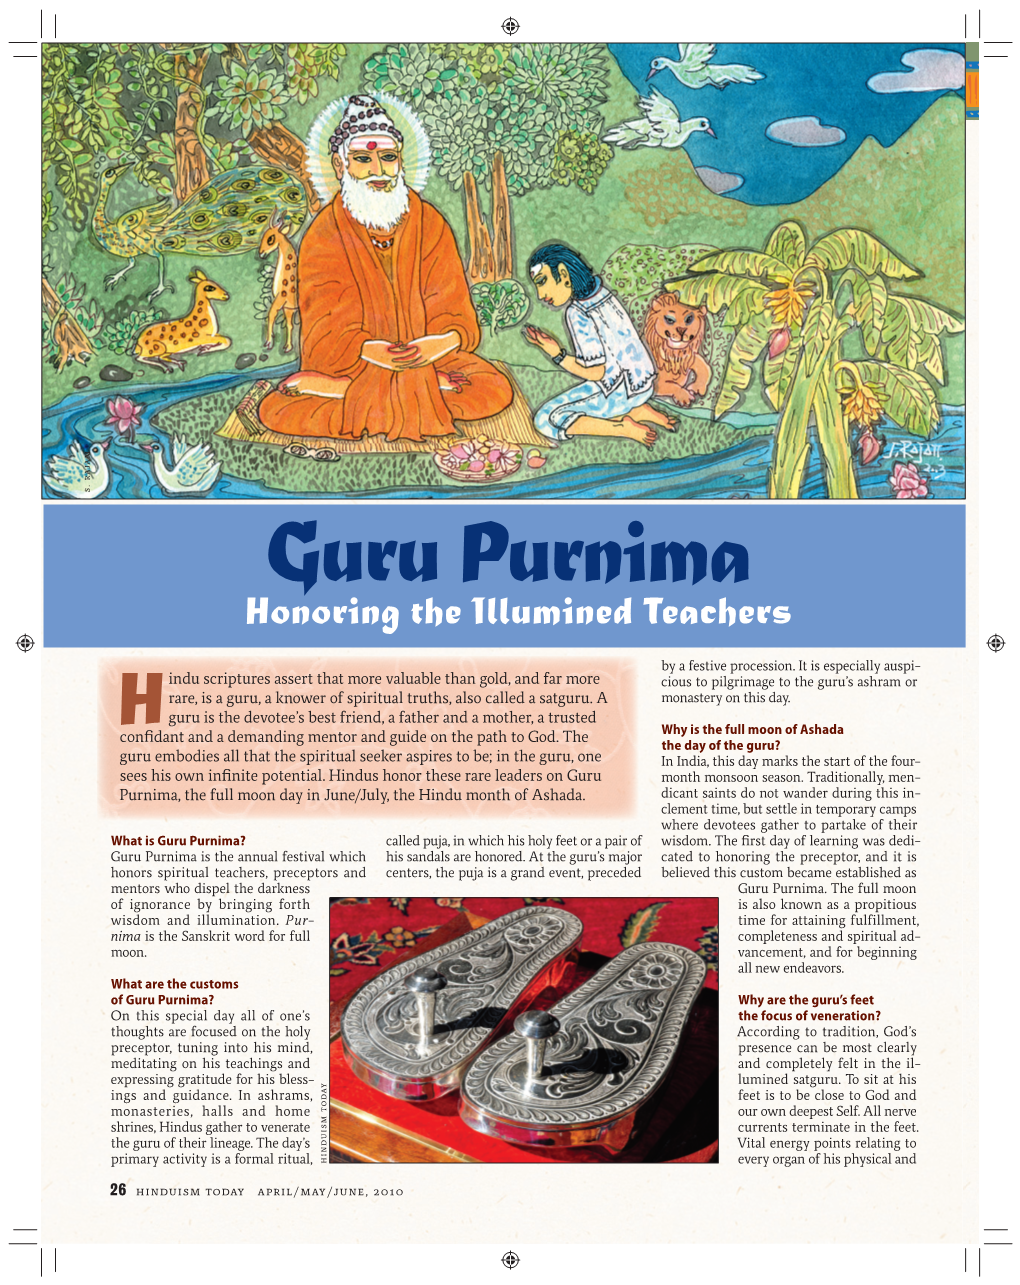 Guru Purnima Honoring the Illumined Teachers